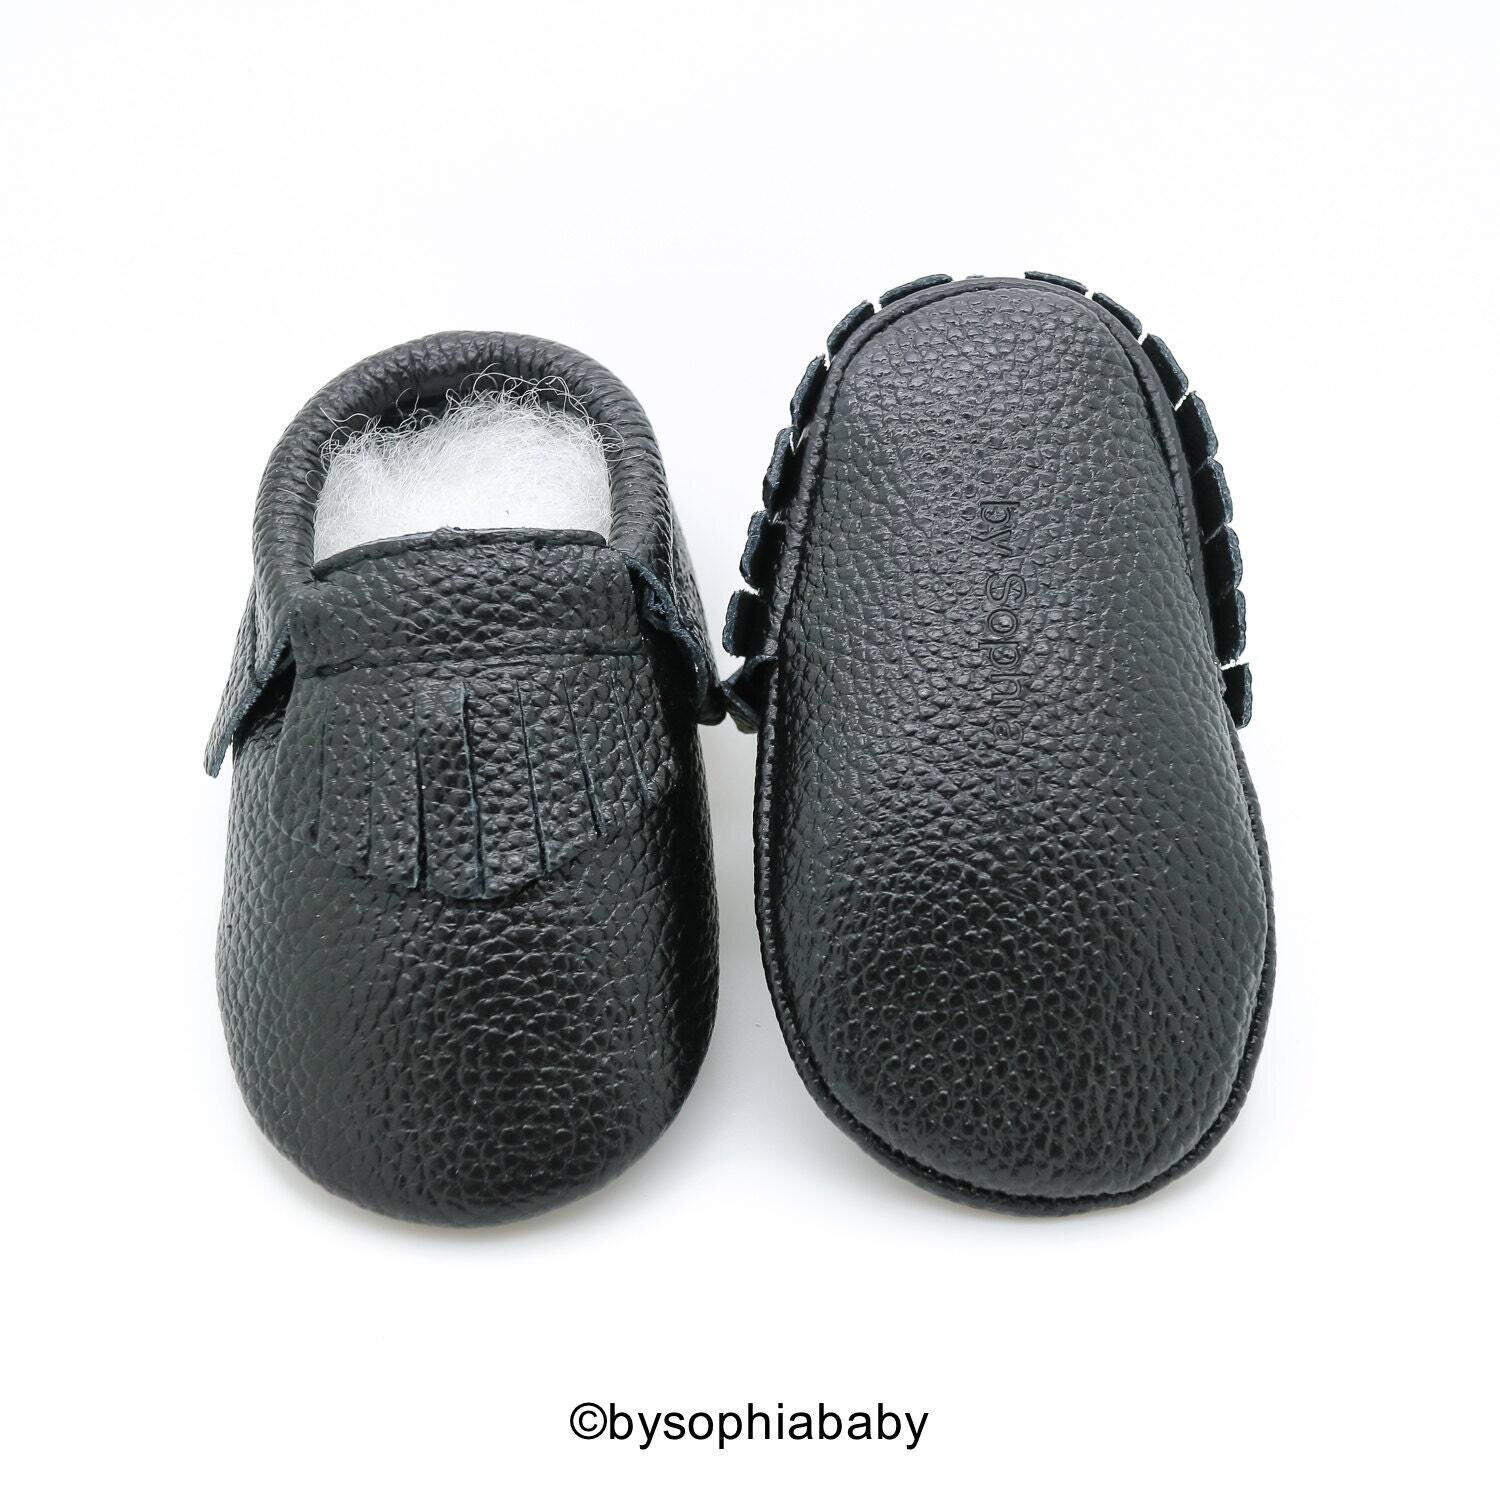 Black Fringe Moccasins Baby Black Moccasins Baby Leather Shoes Genuine Leather Moccs Toddler Moccasins Baby Moccs Baby Shower Gift